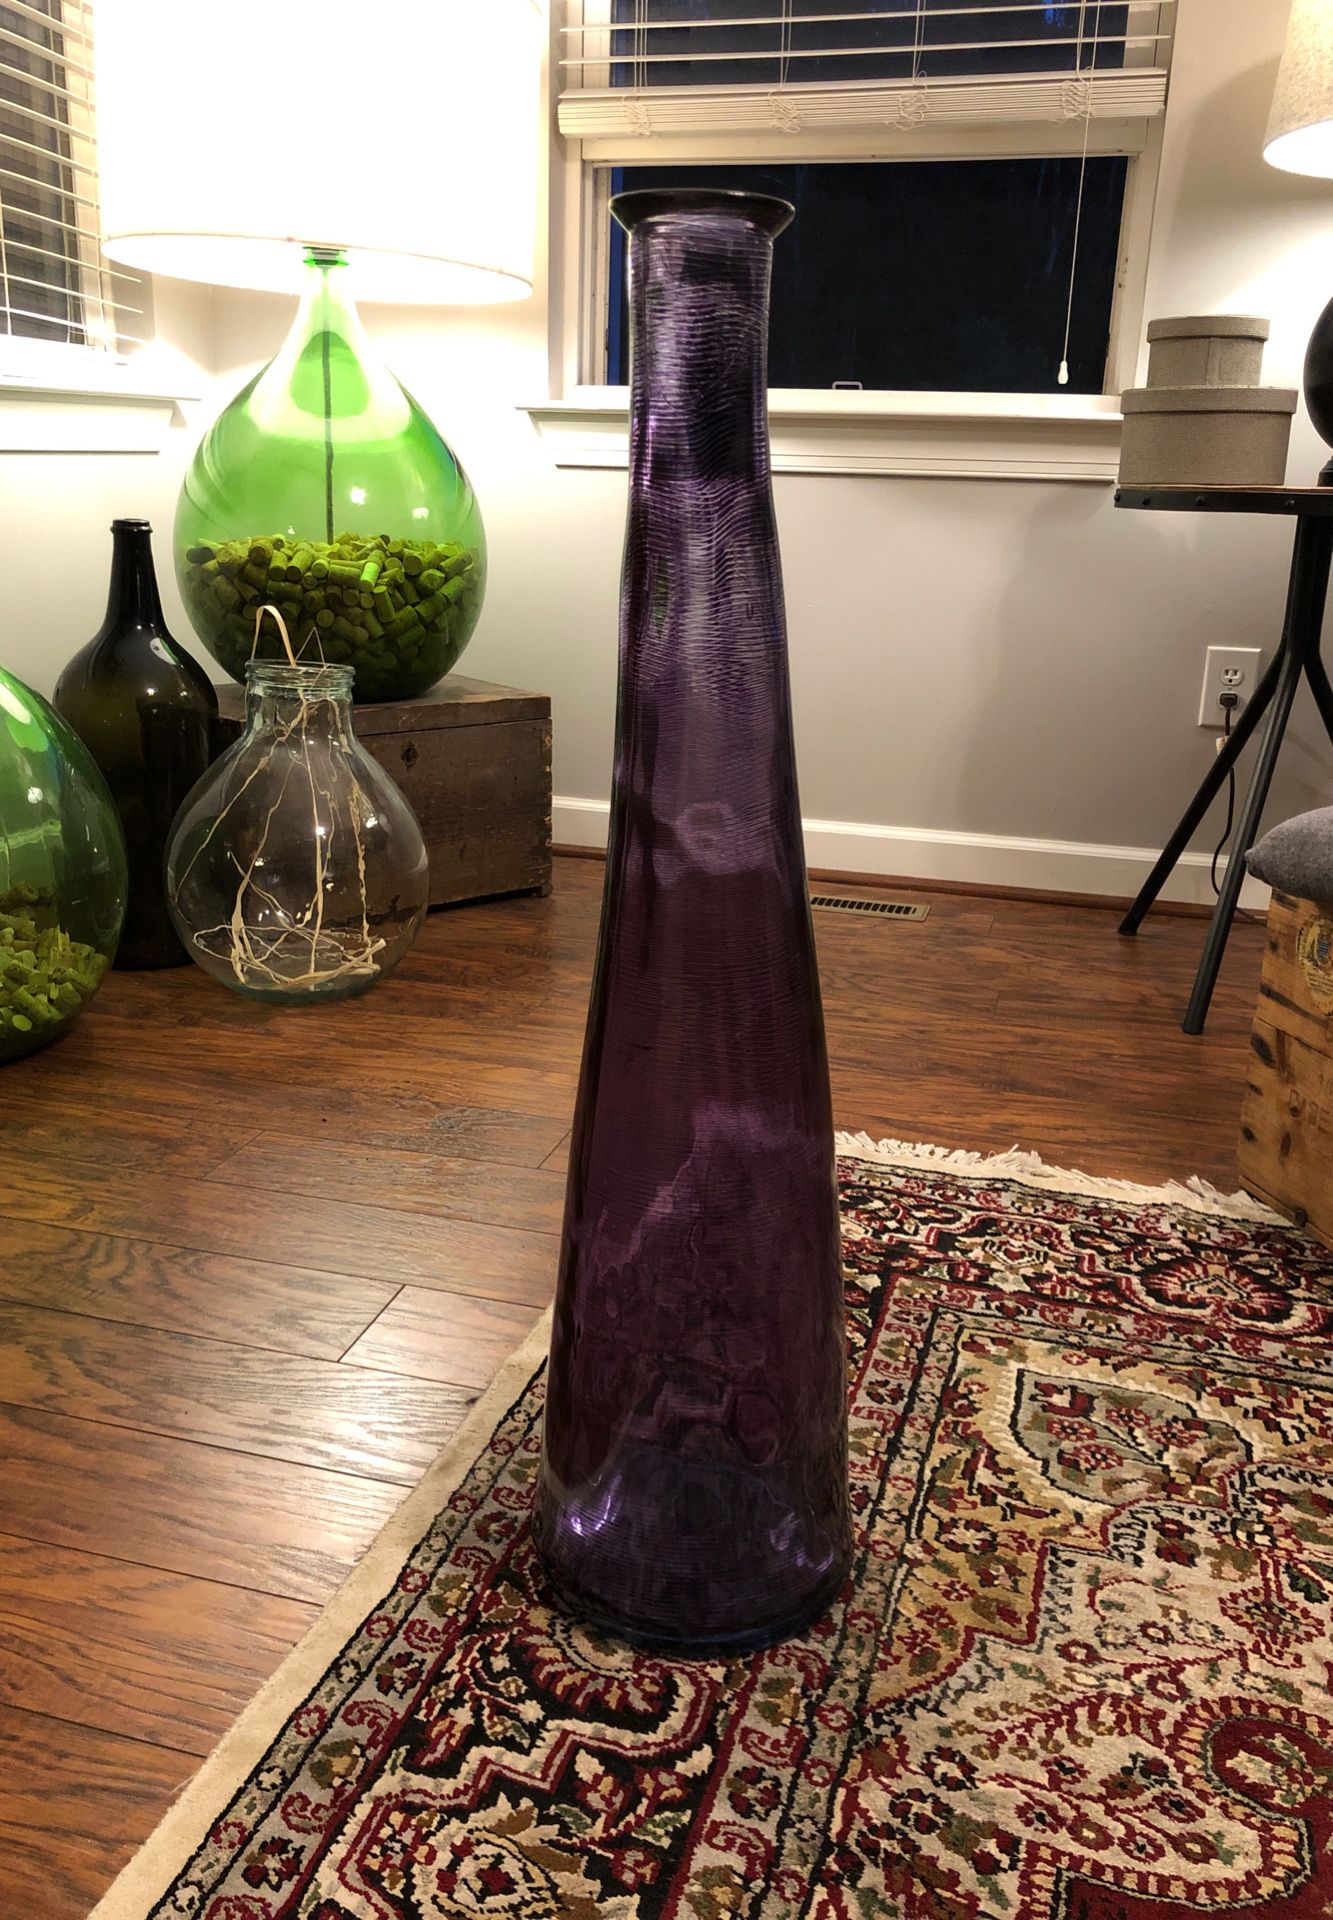 Large, decorative glass bottle